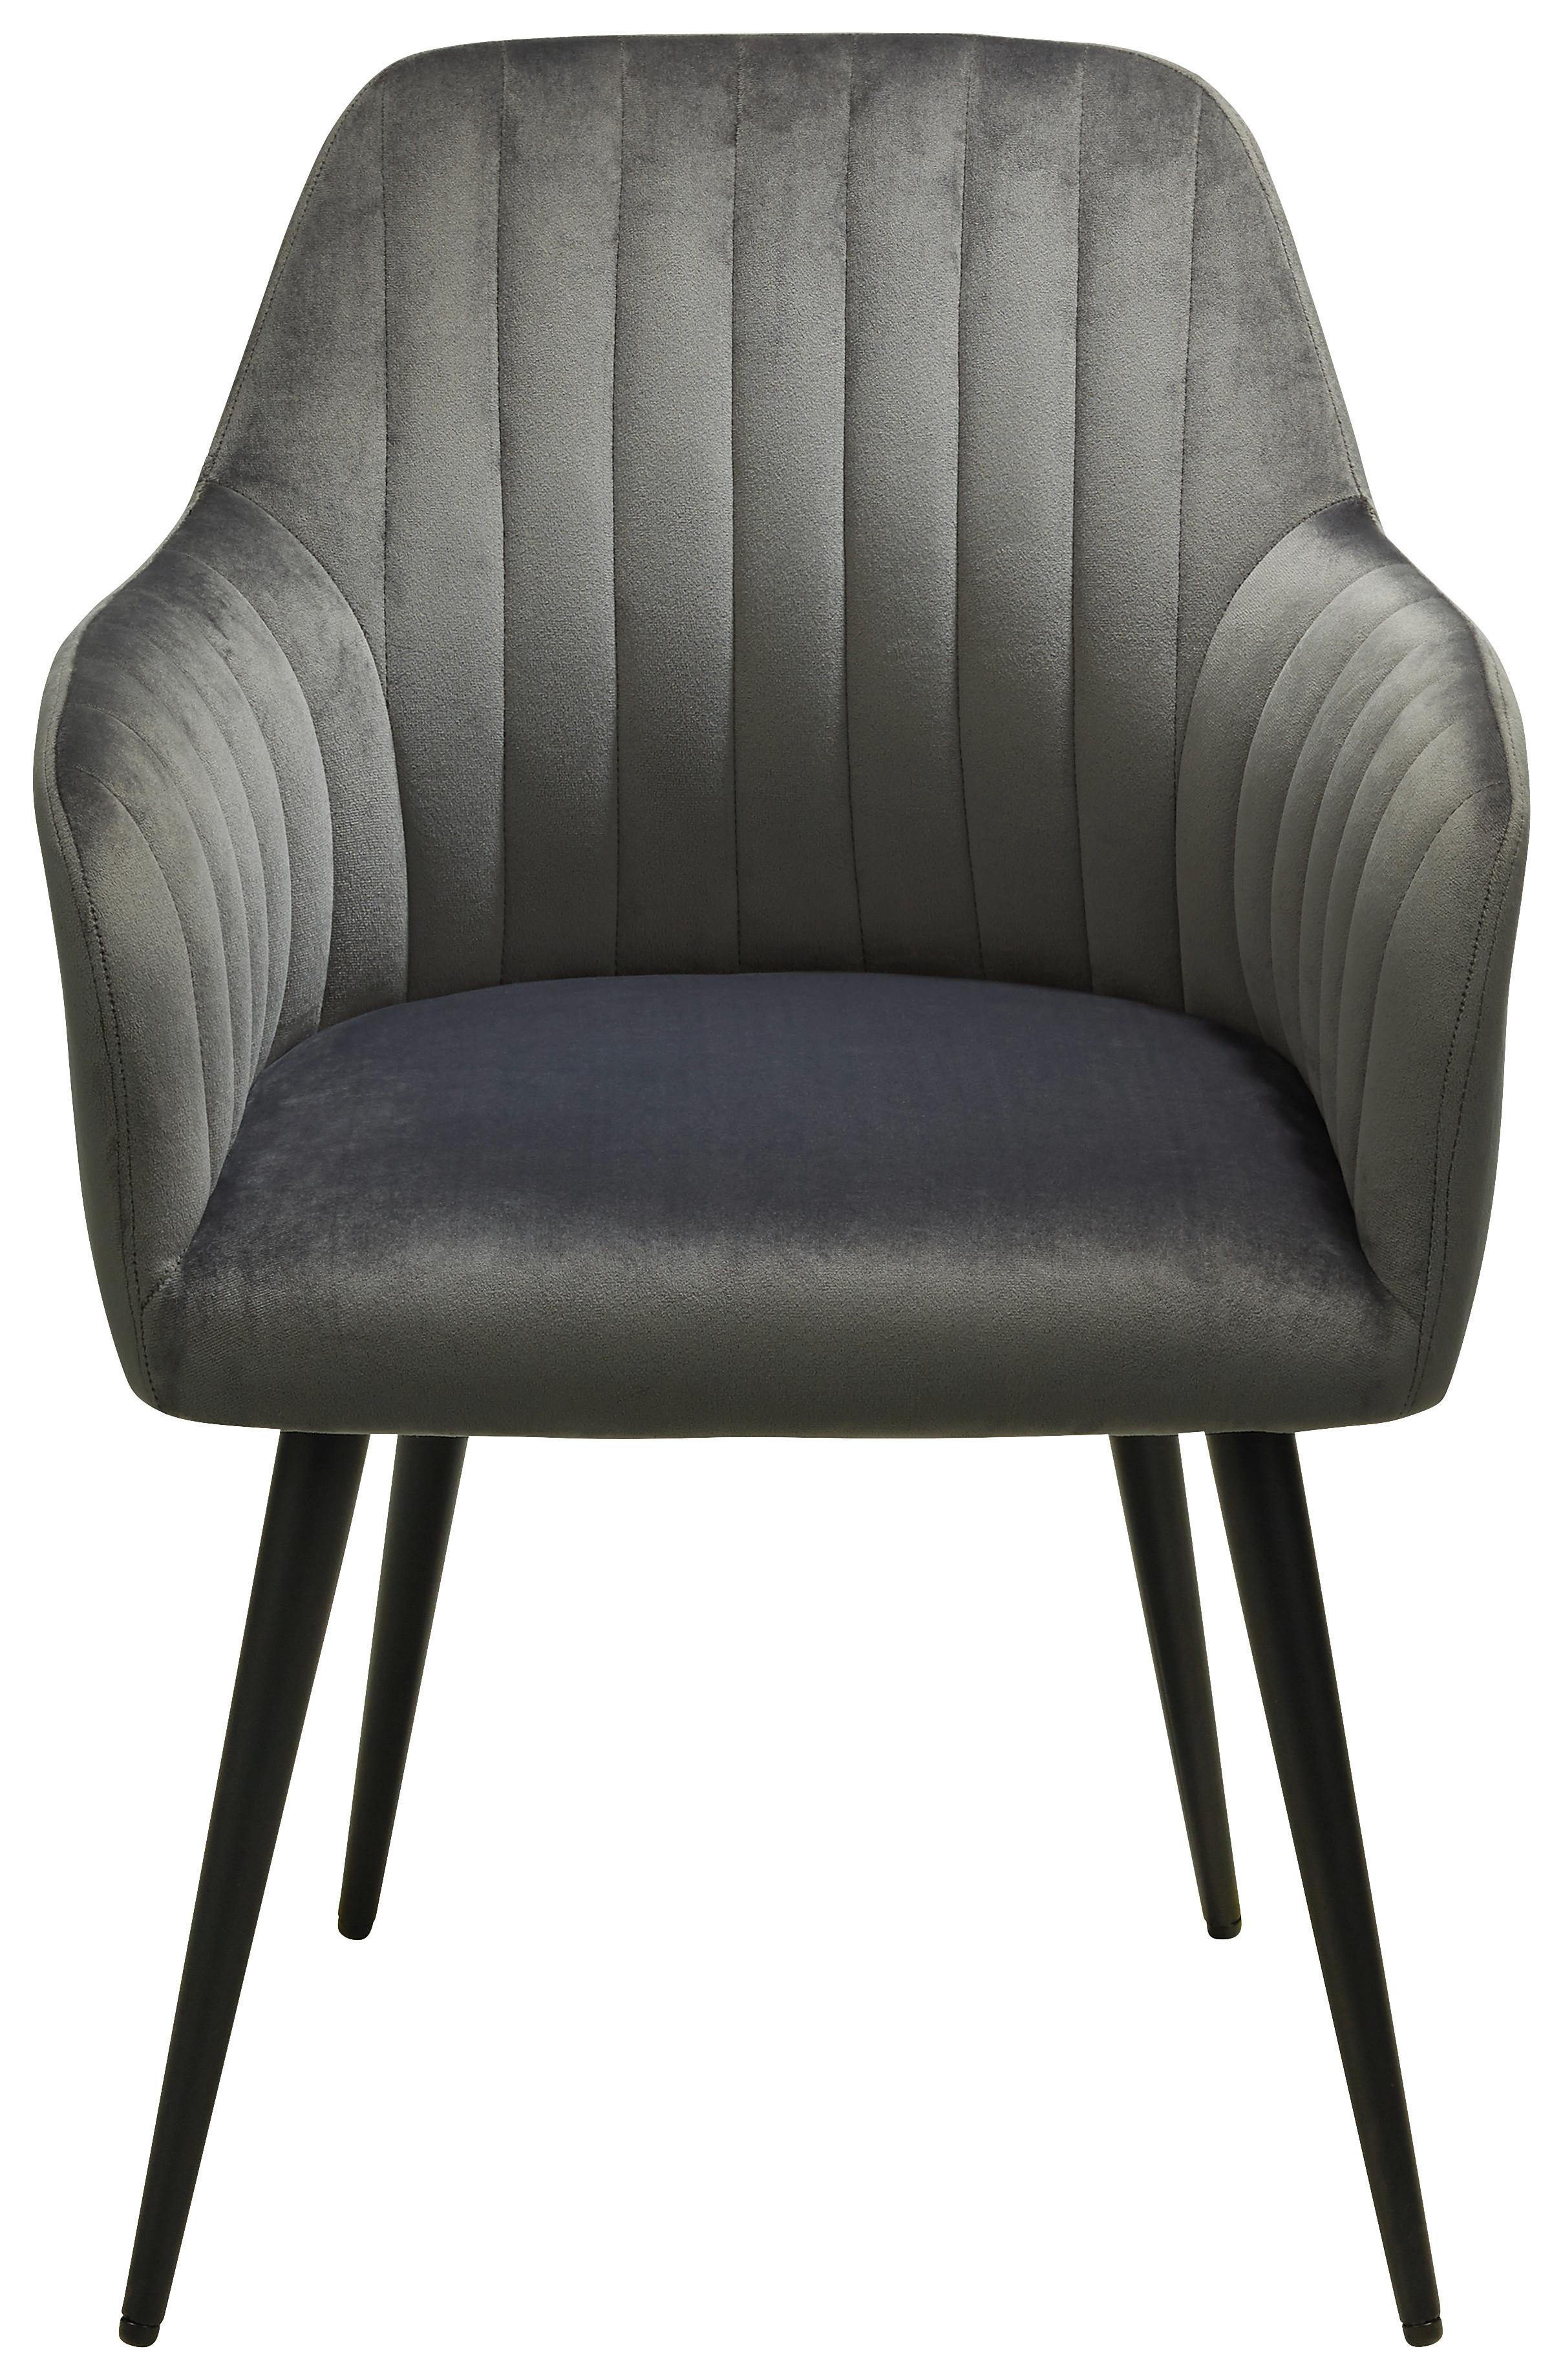 krzesło MARTHA -TOP- - czarny/szary, Modern, metal/tkanina (57/83,5/58cm) - Modern Living